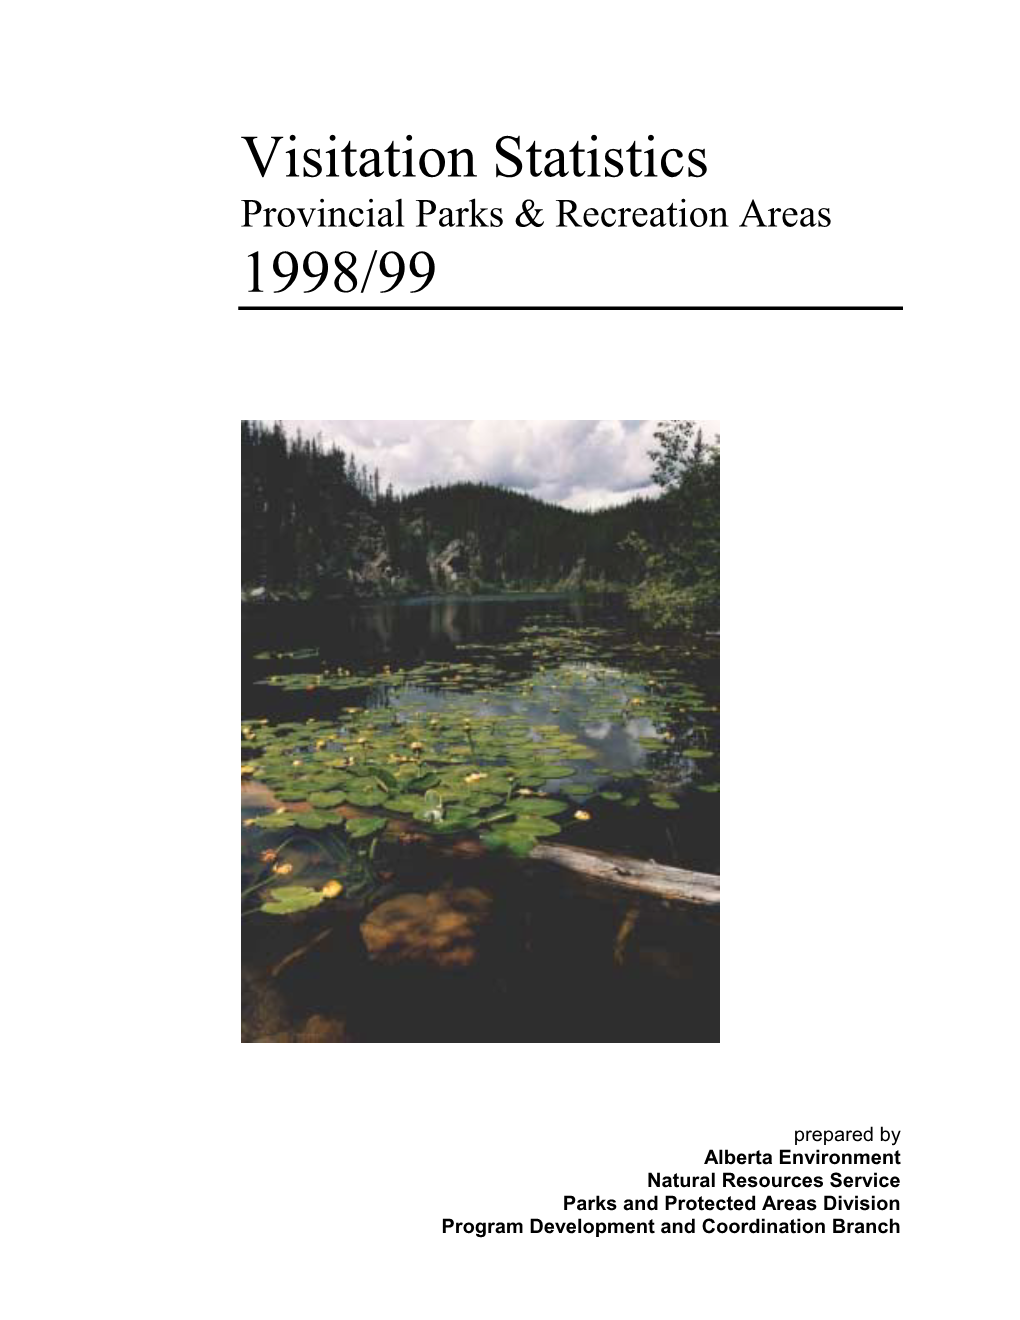 Visitation Statistics Provincial Parks & Recreation Areas 1998/99